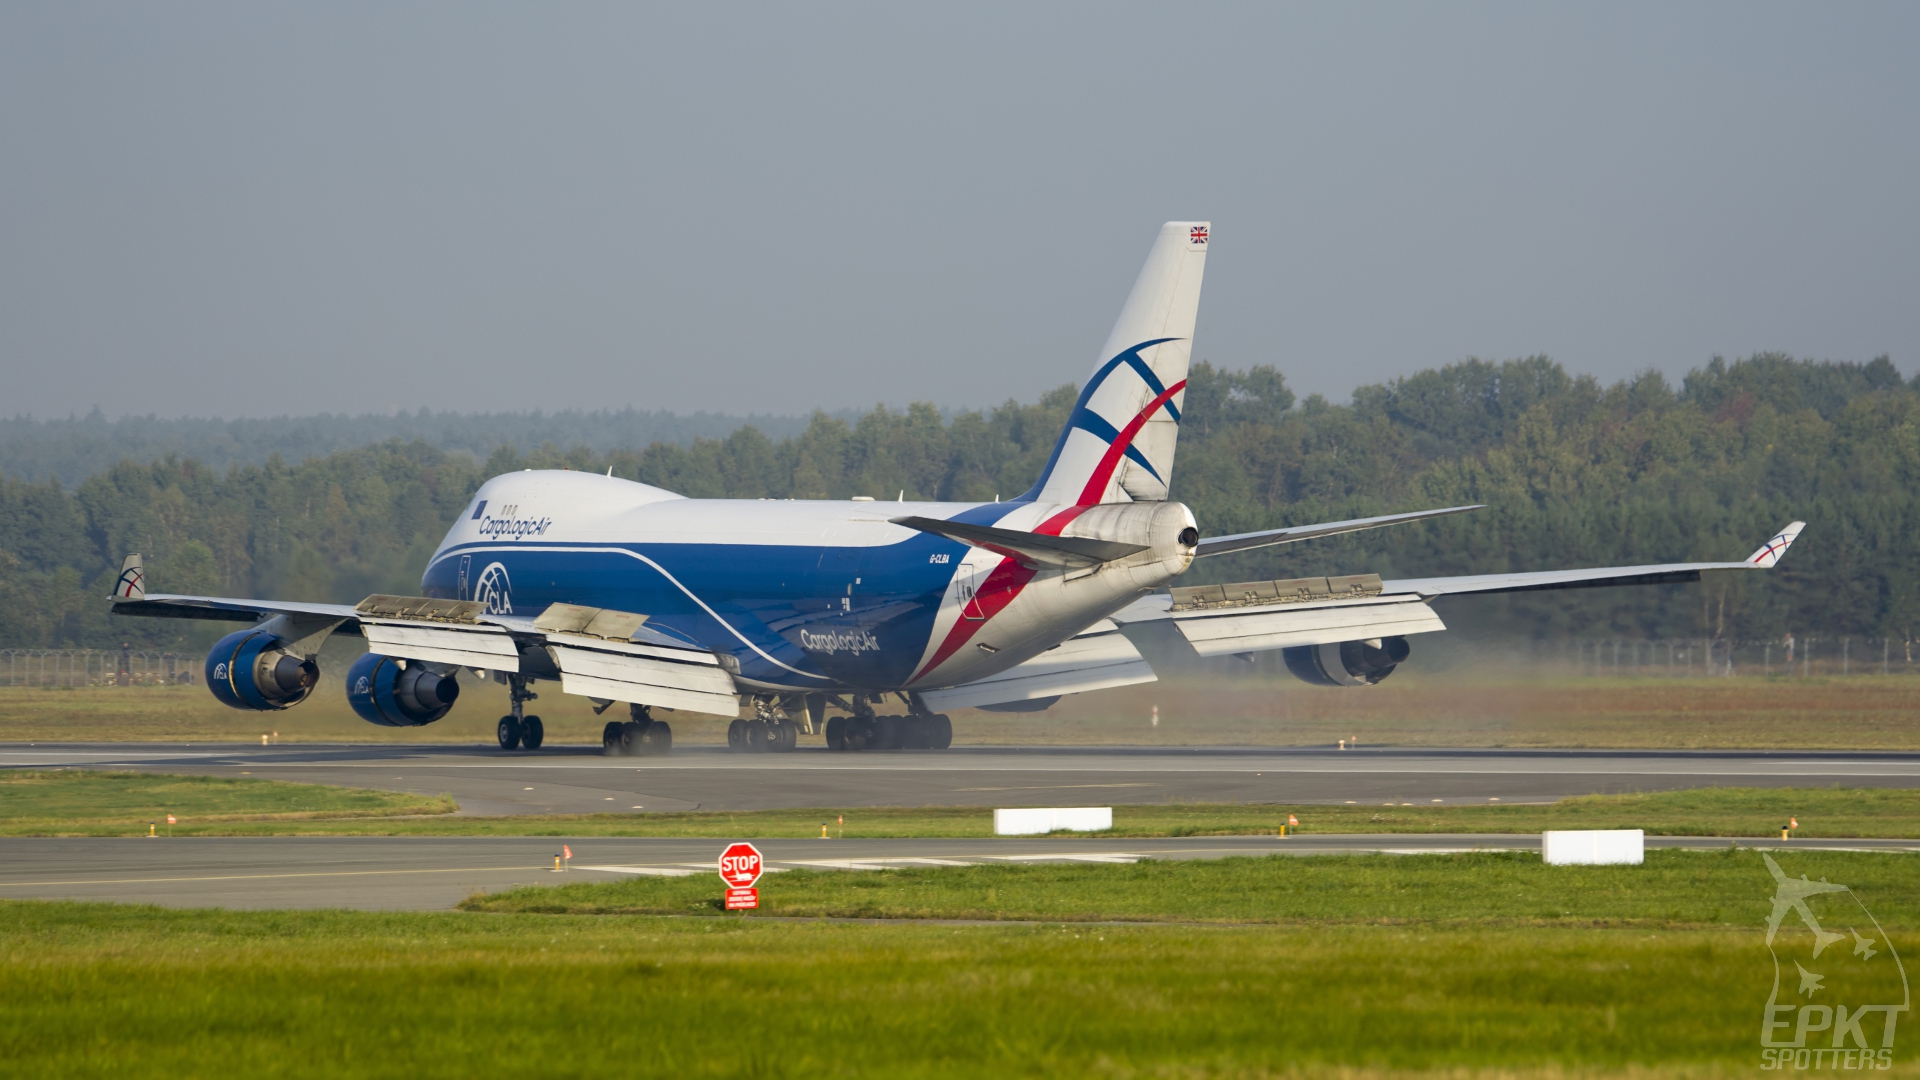 G-CLBA - Boeing 747 -428ERF (Cargologicair) / Pyrzowice - Katowice Poland [EPKT/KTW]